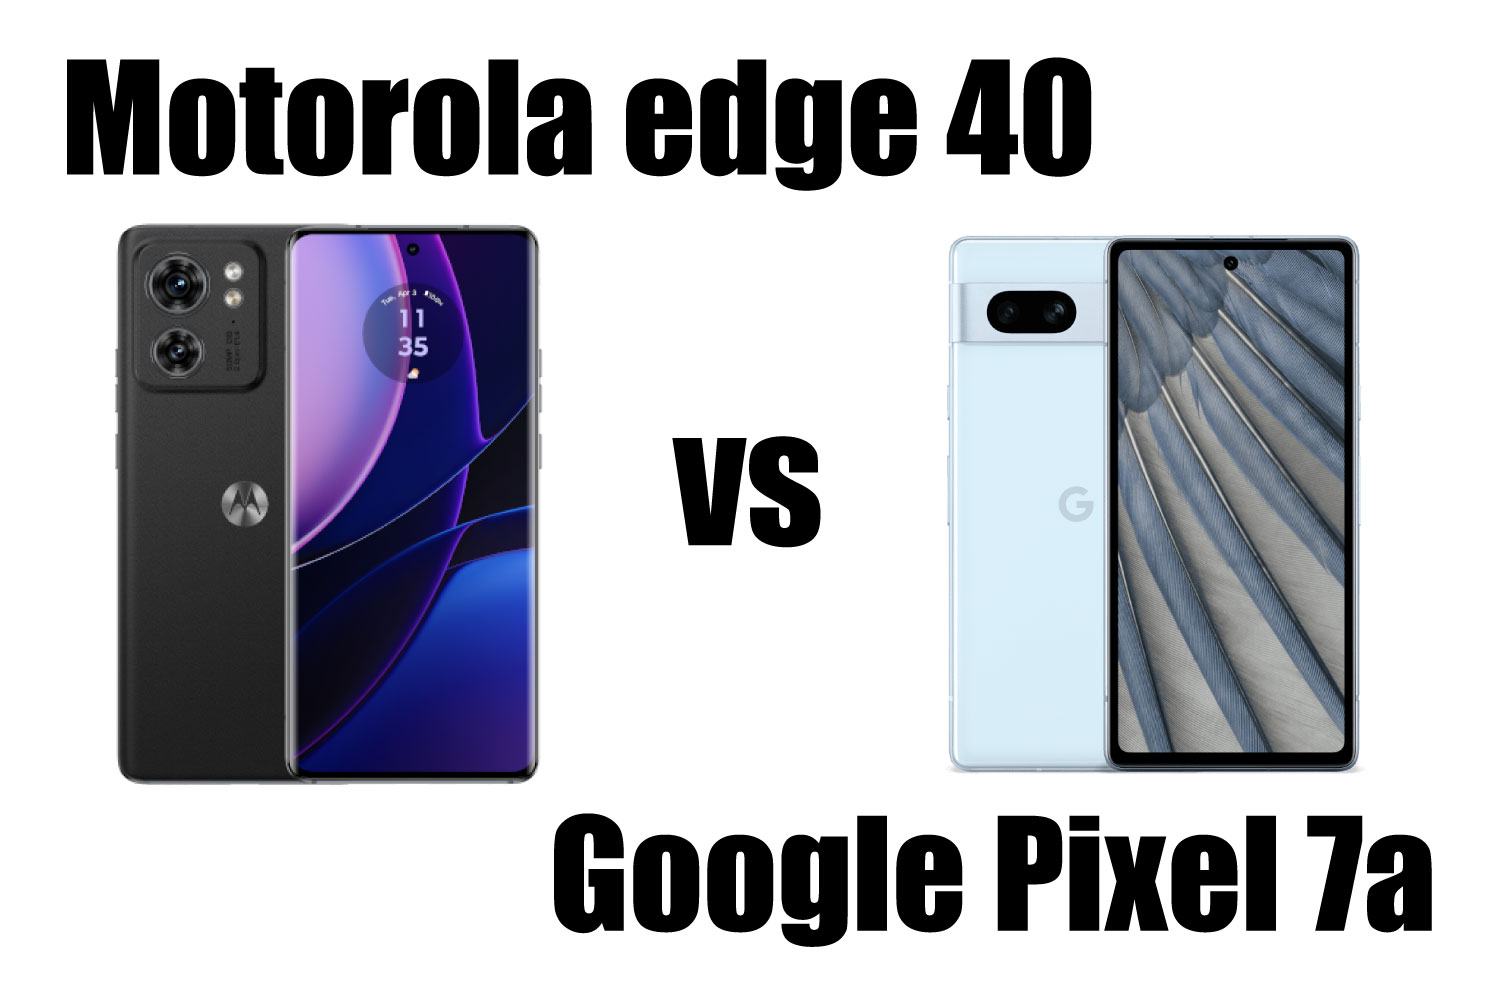 Motorora edge 40 vs Pixel 7a